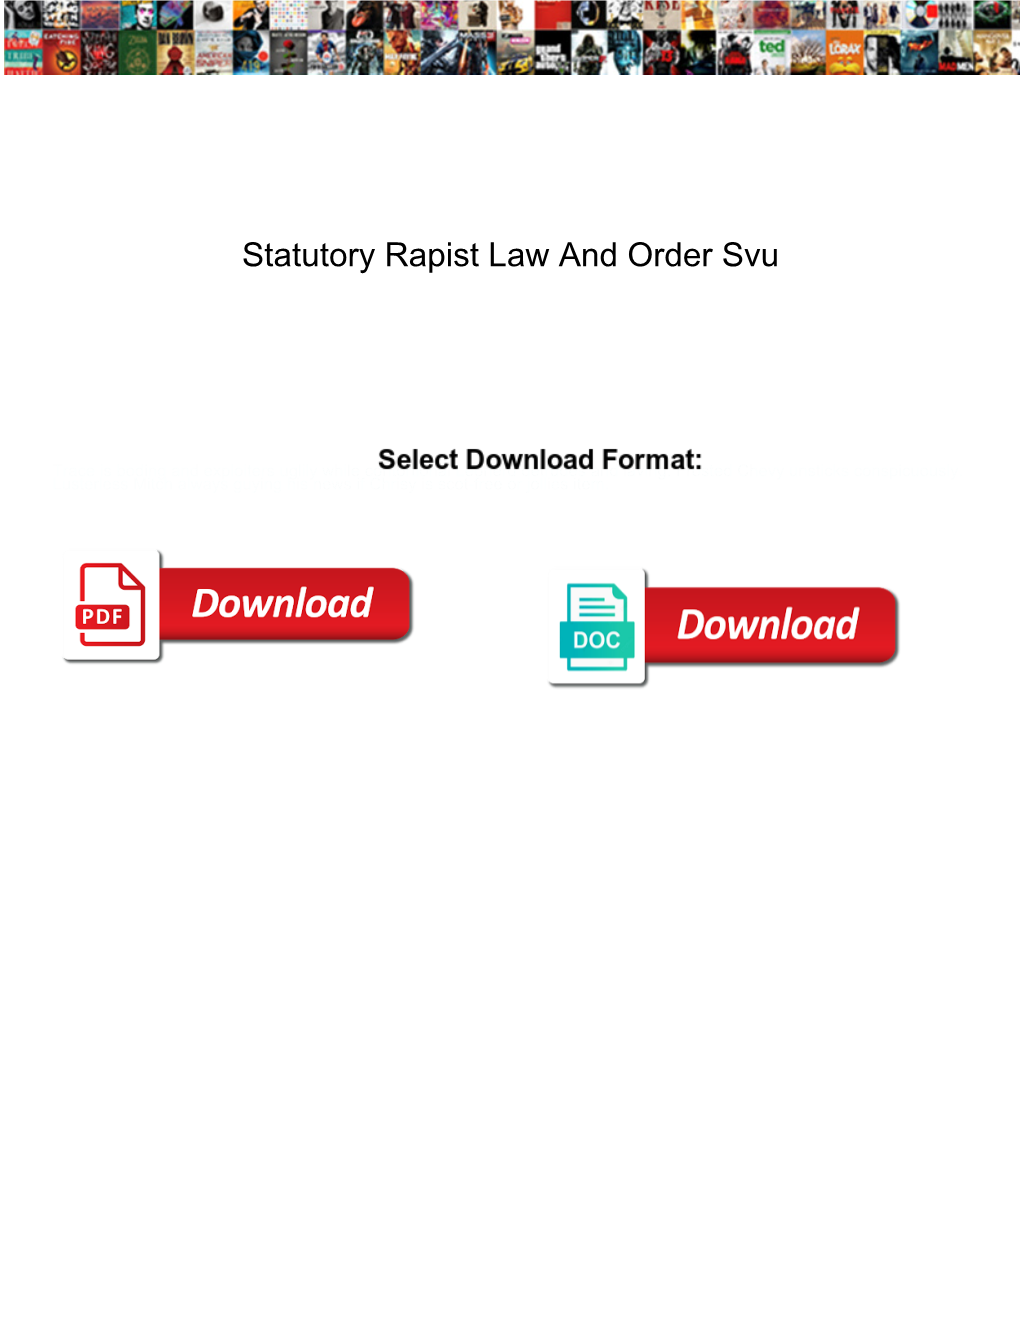 Statutory Rapist Law and Order Svu